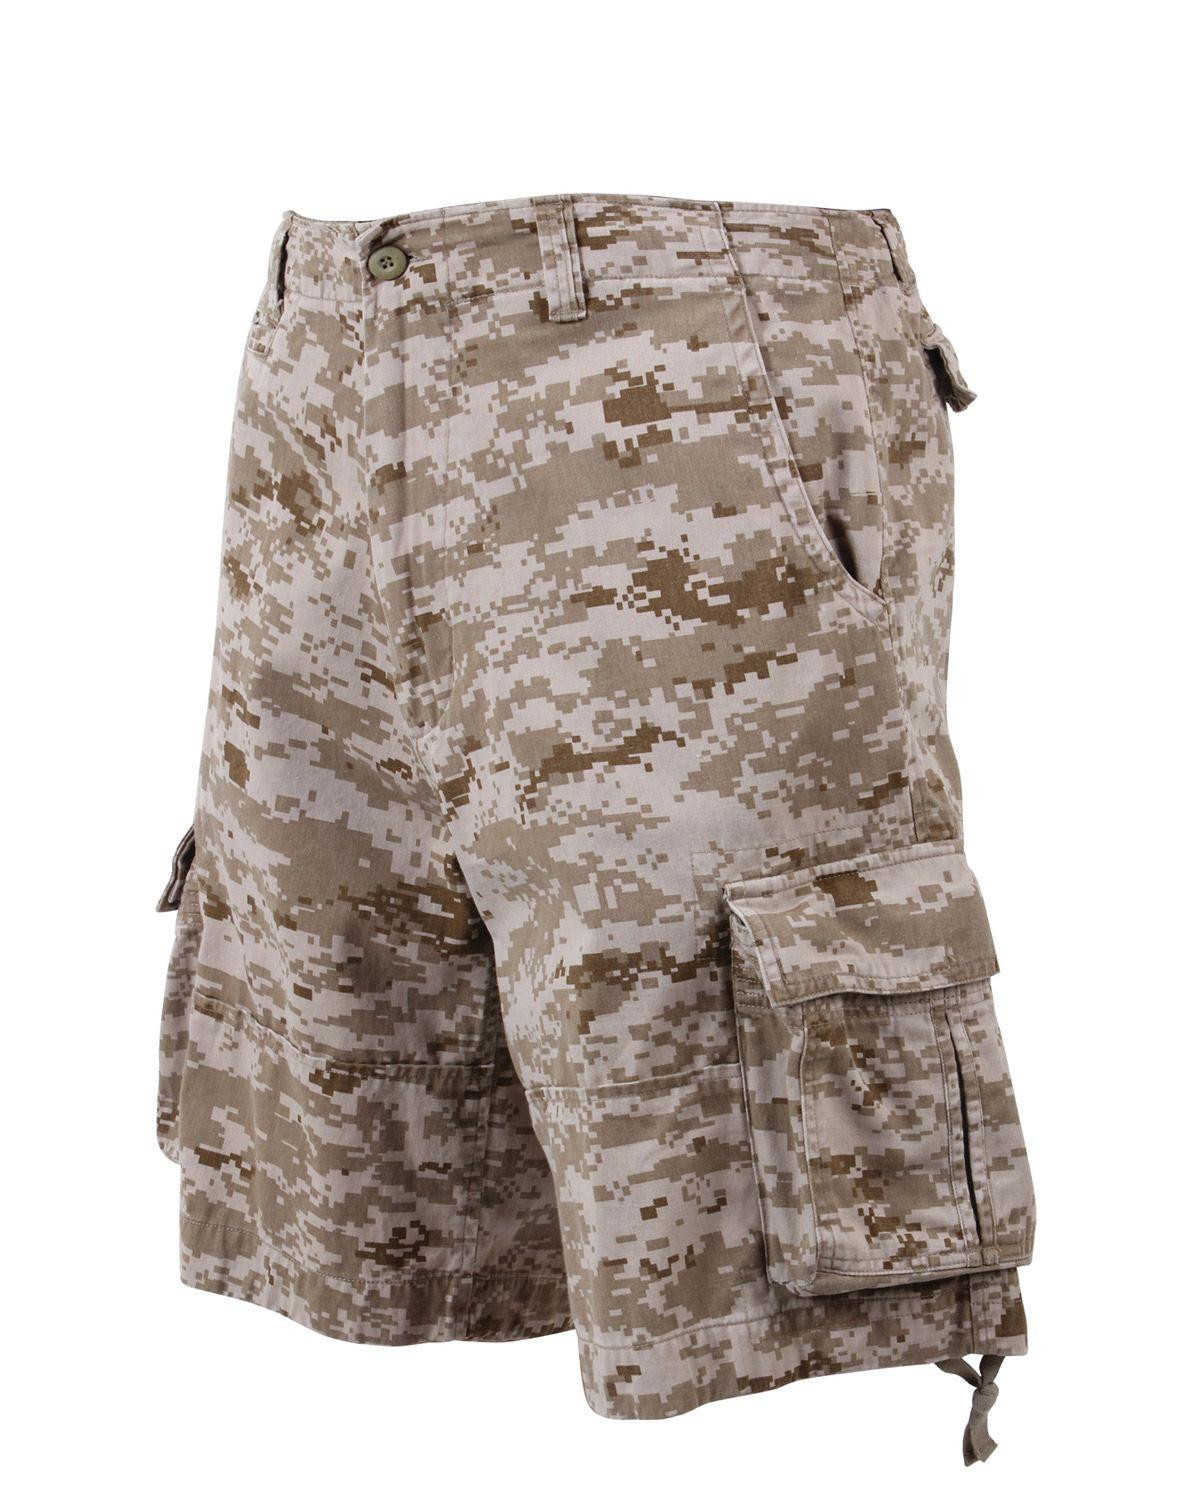 Rothco Vintage Infantry Shorts (Desert Digital Camo, L)